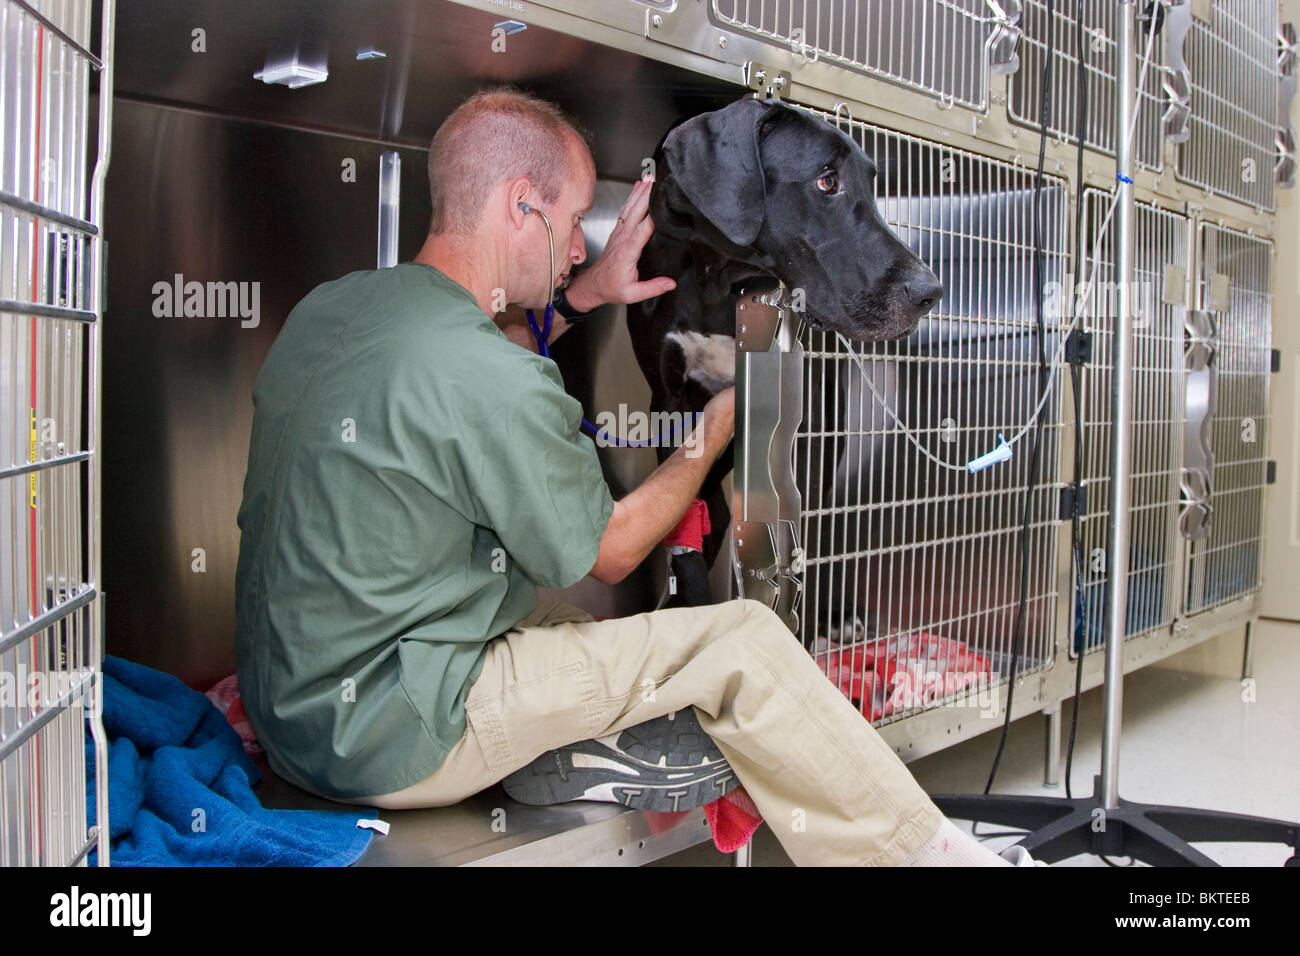 Veterinarian technician checks health of black Great Dane dog in crate Stock Photo